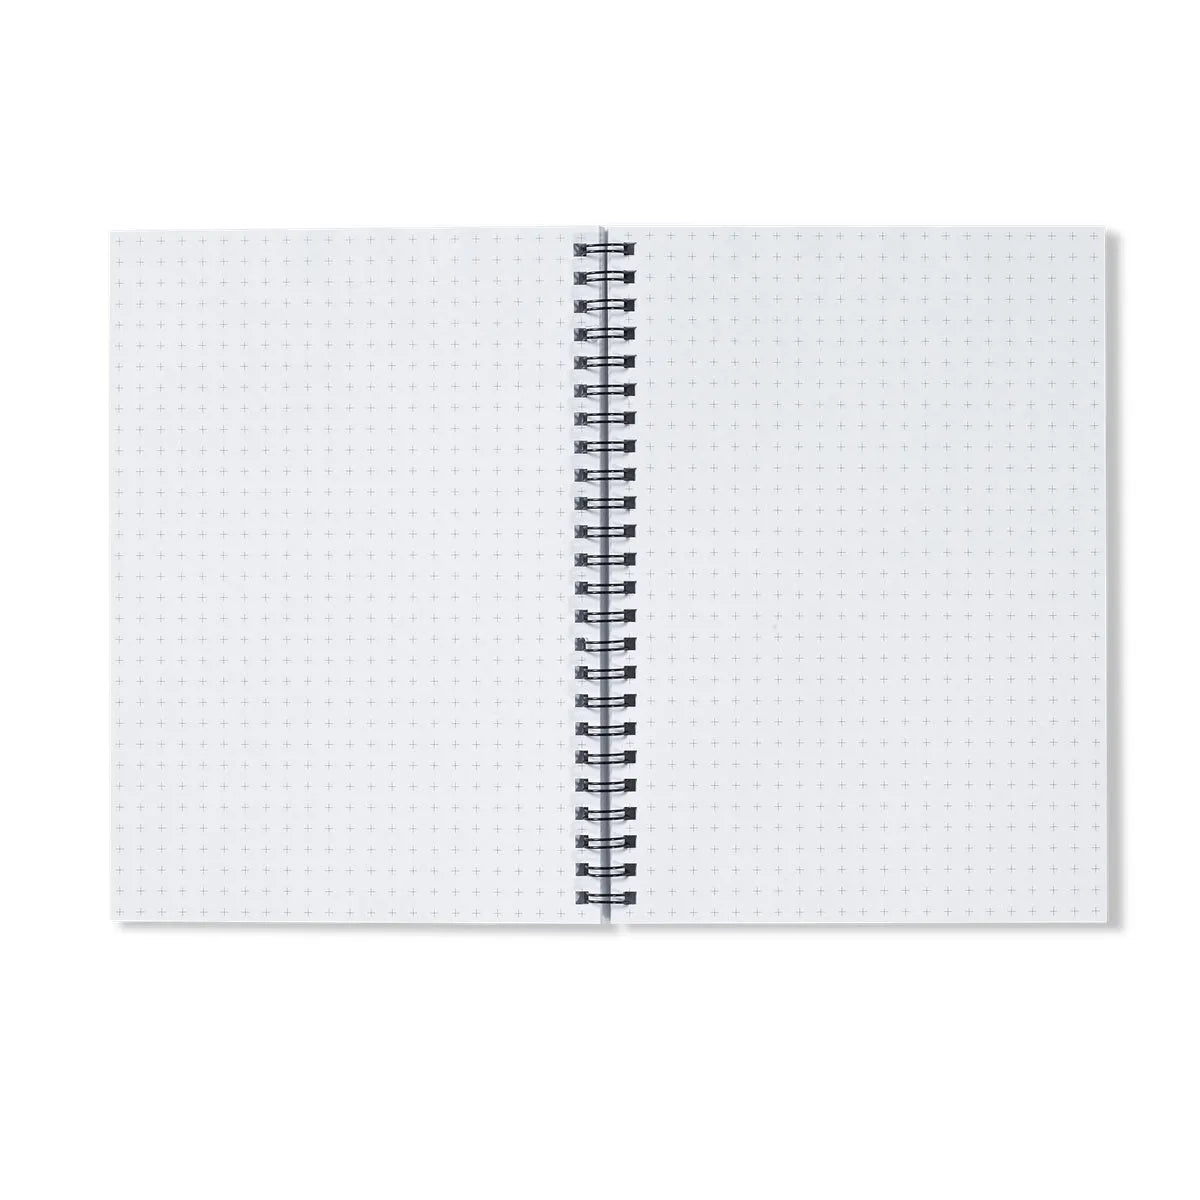 Heart Shaped Box Notebook - Notebooks & Notepads - Aesthetic Art